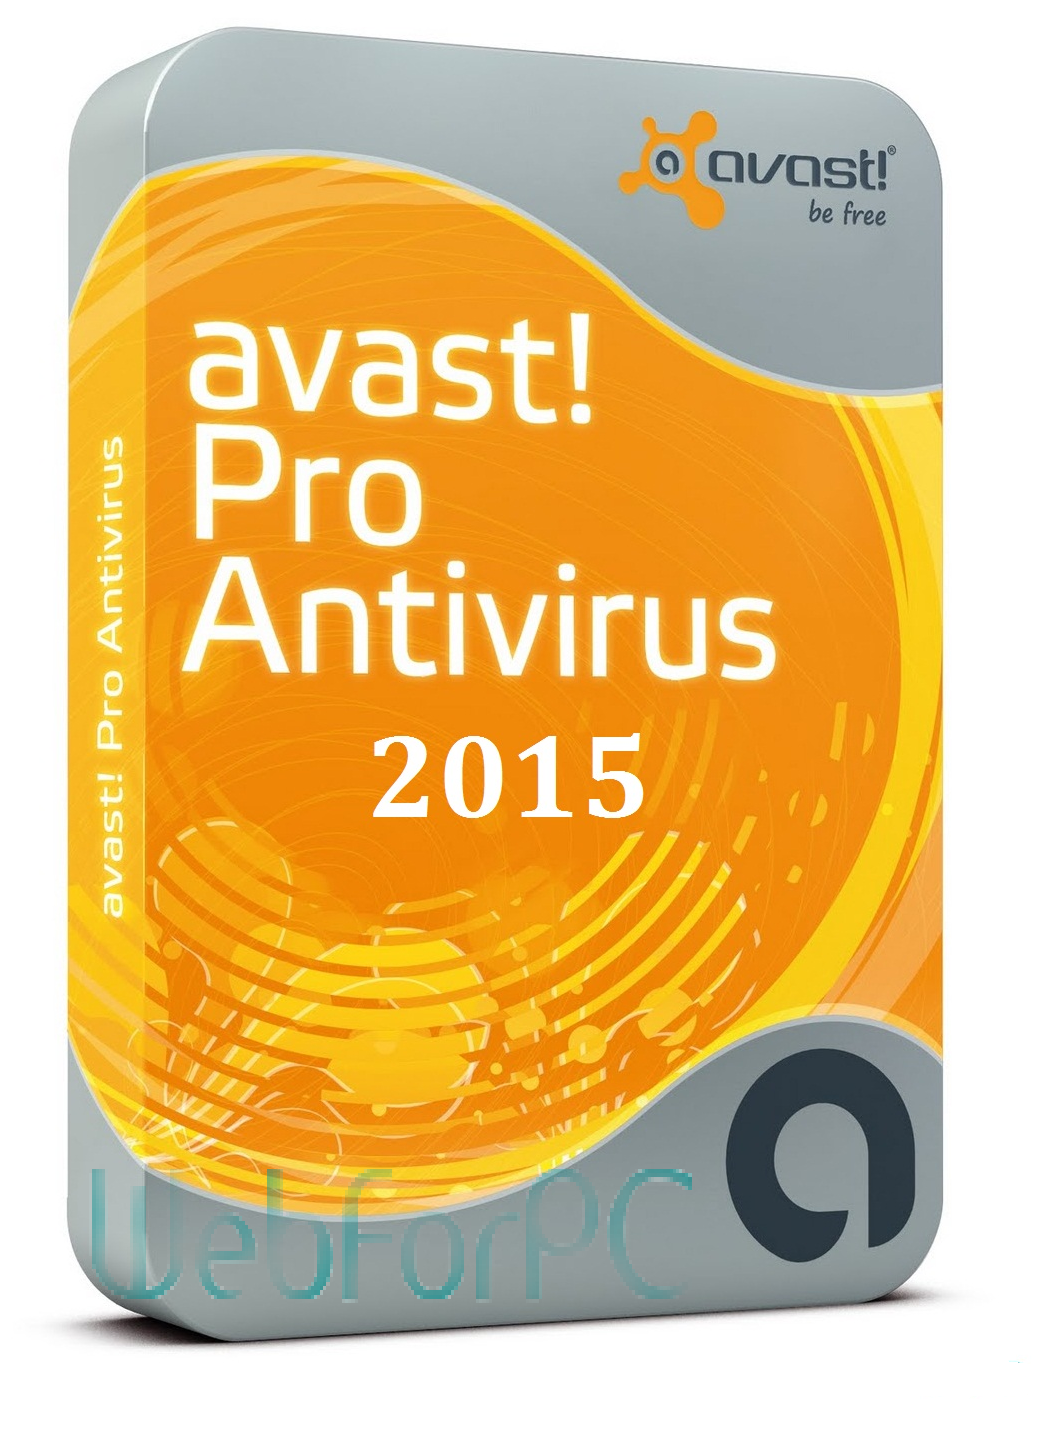 dowloawd advast antivirus